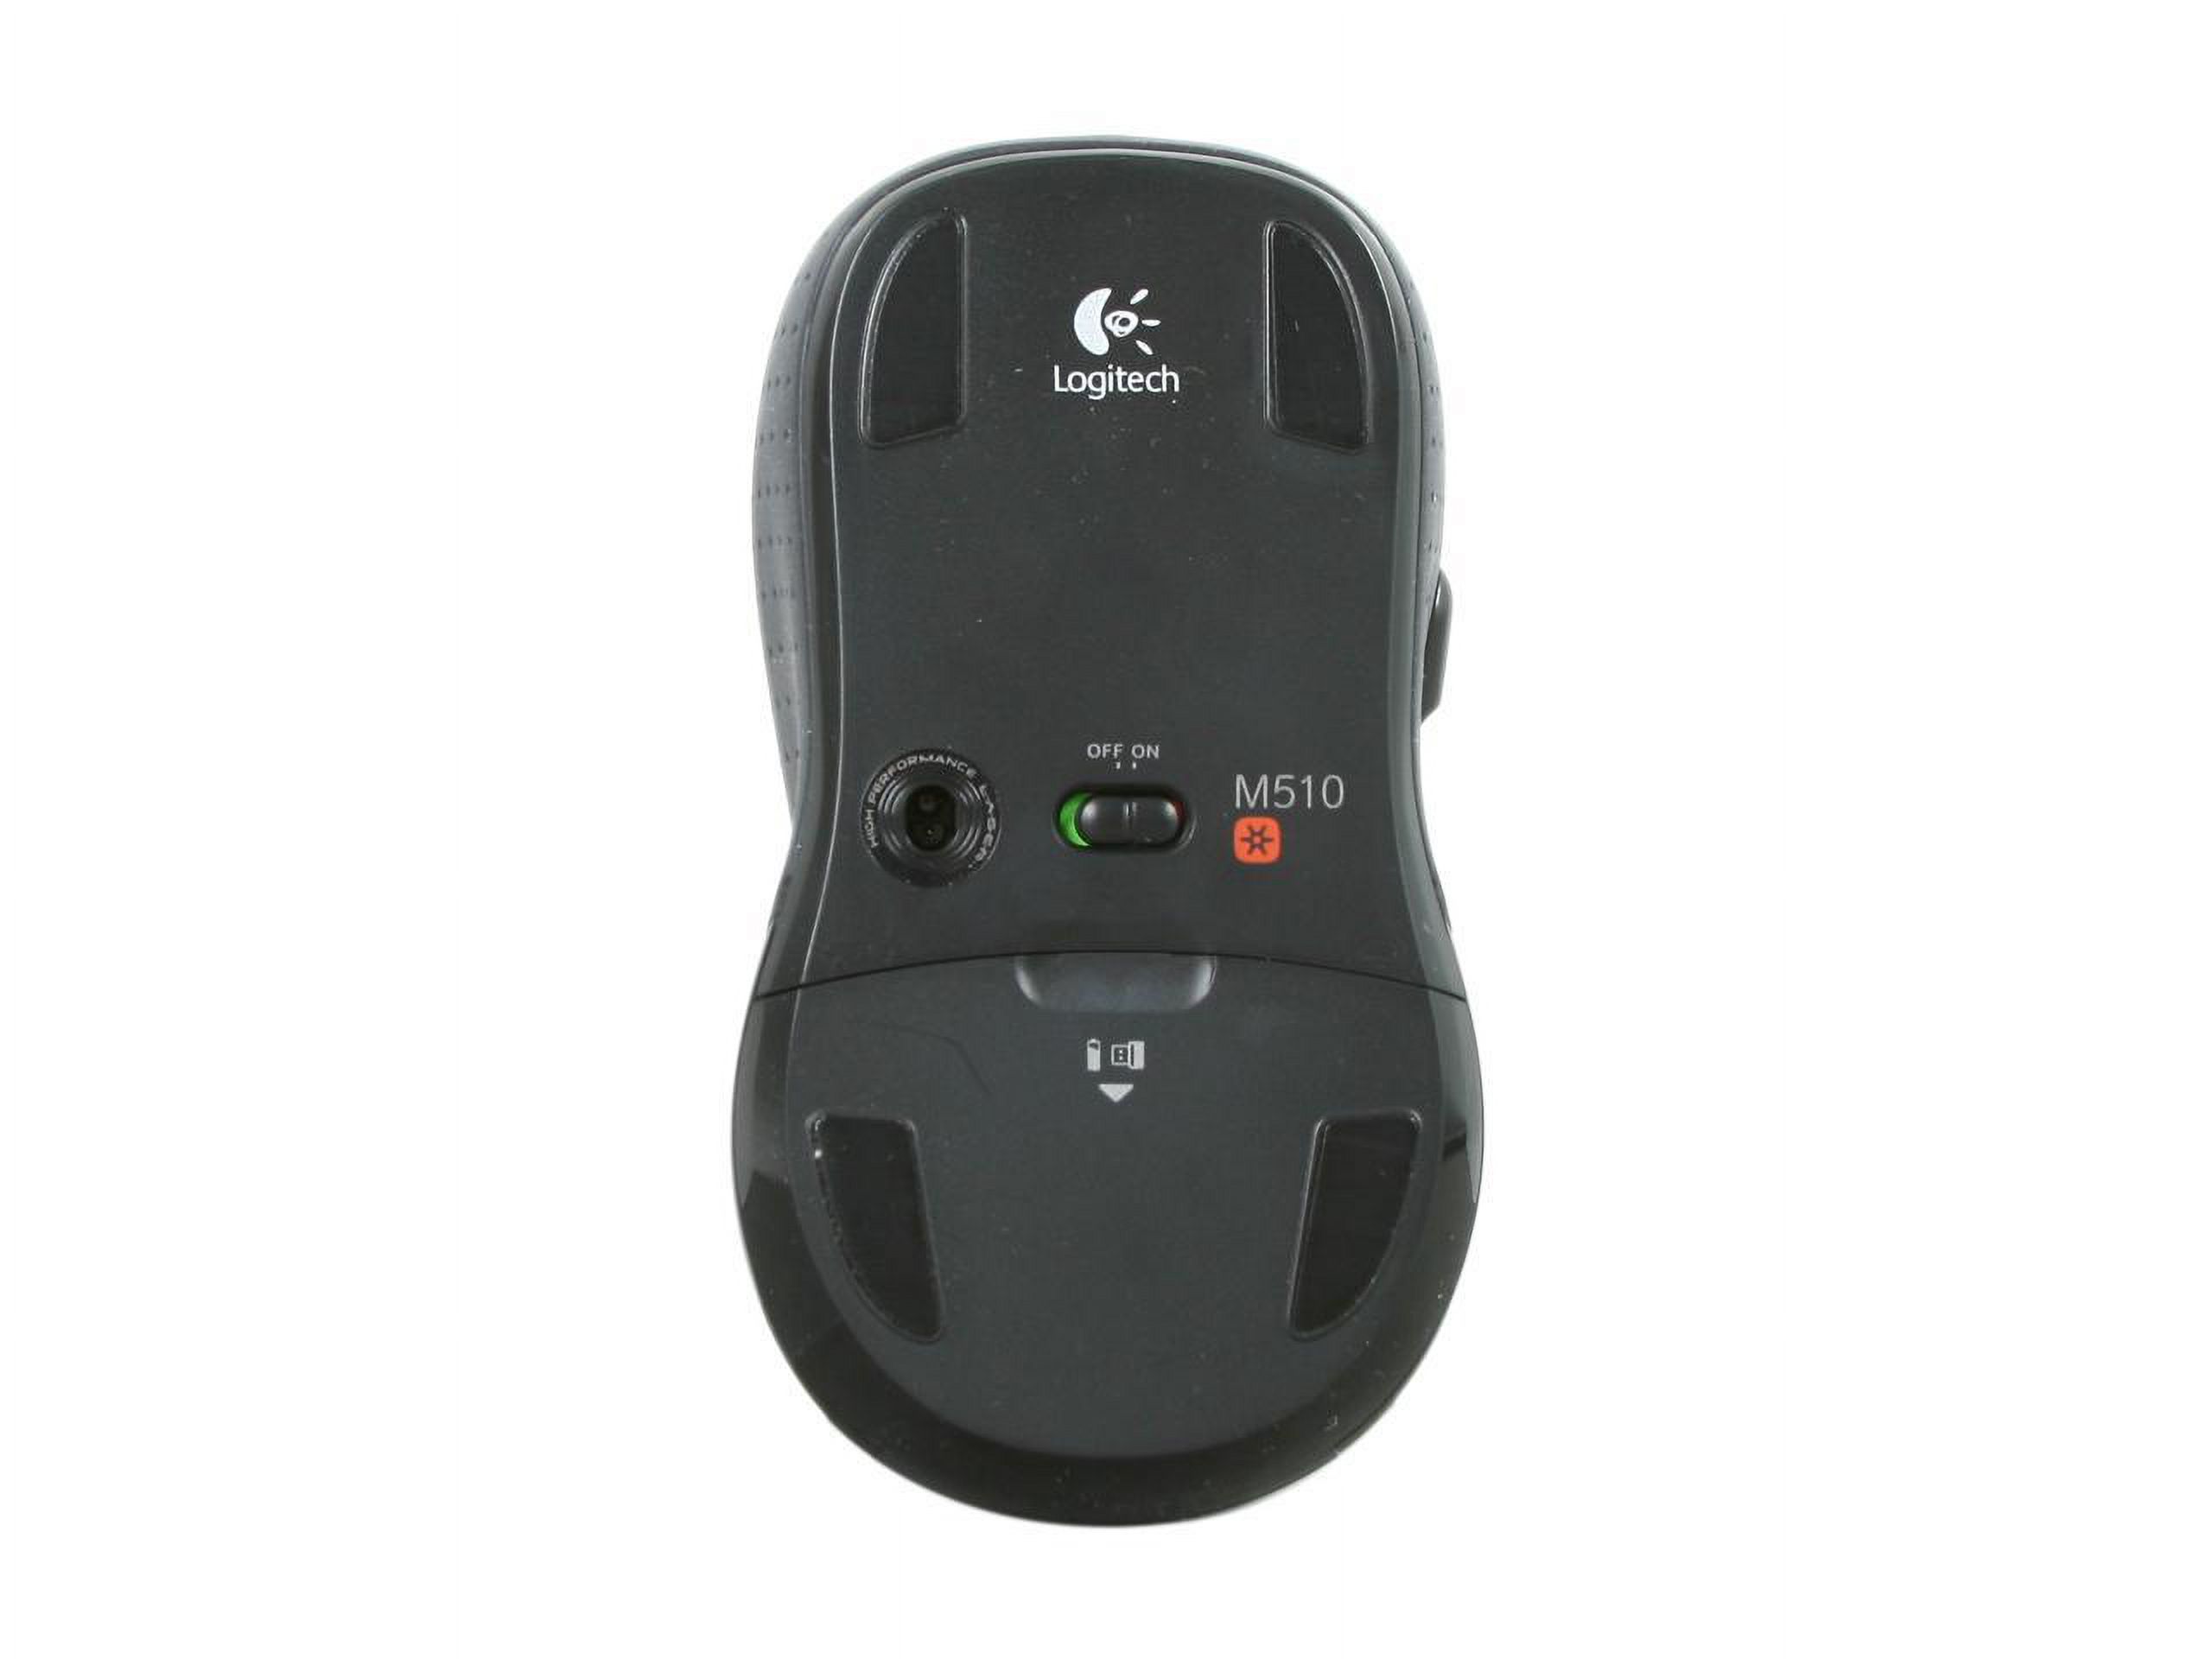 Logitech Wireless Mouse M510 - image 5 of 7